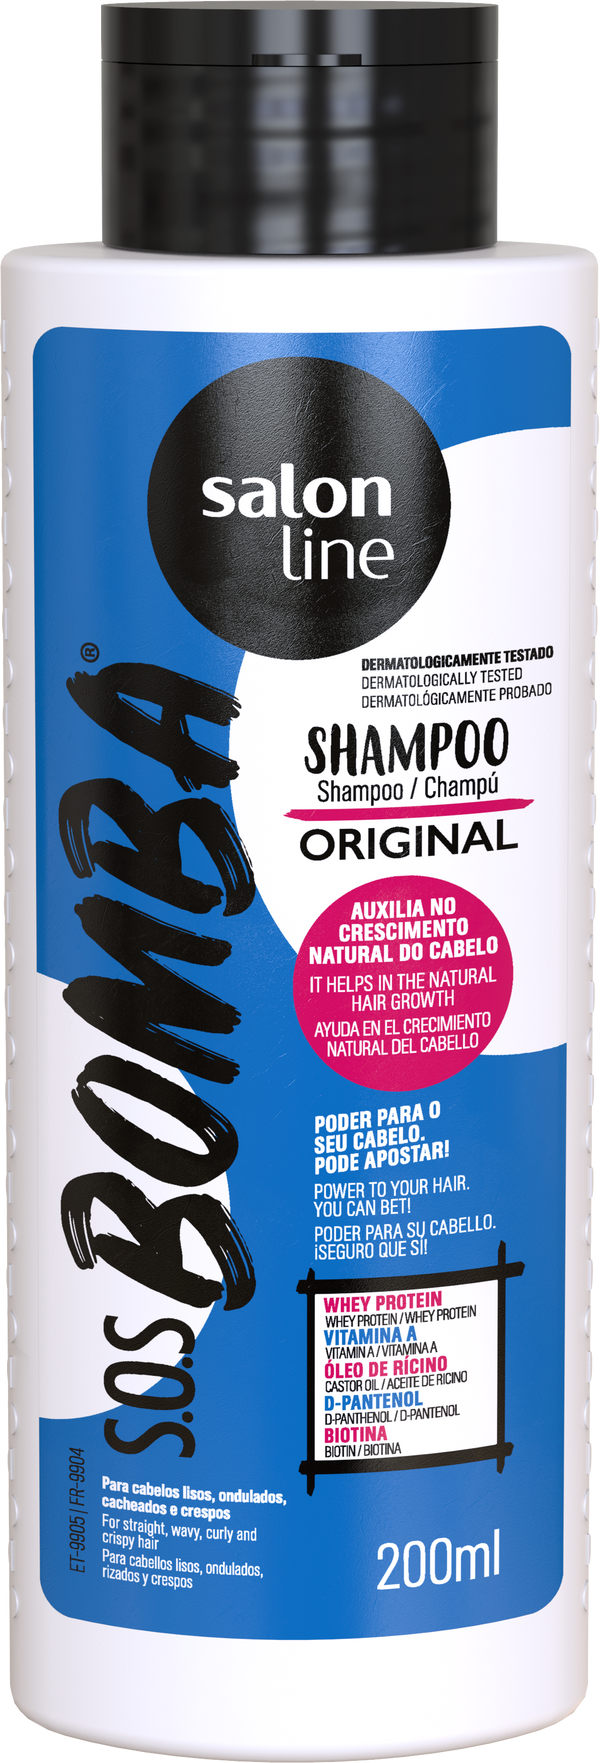 Salon Line S.O.S Bomba Original Shampoo 200ml + Conditioner 200ml Kit Salon Line